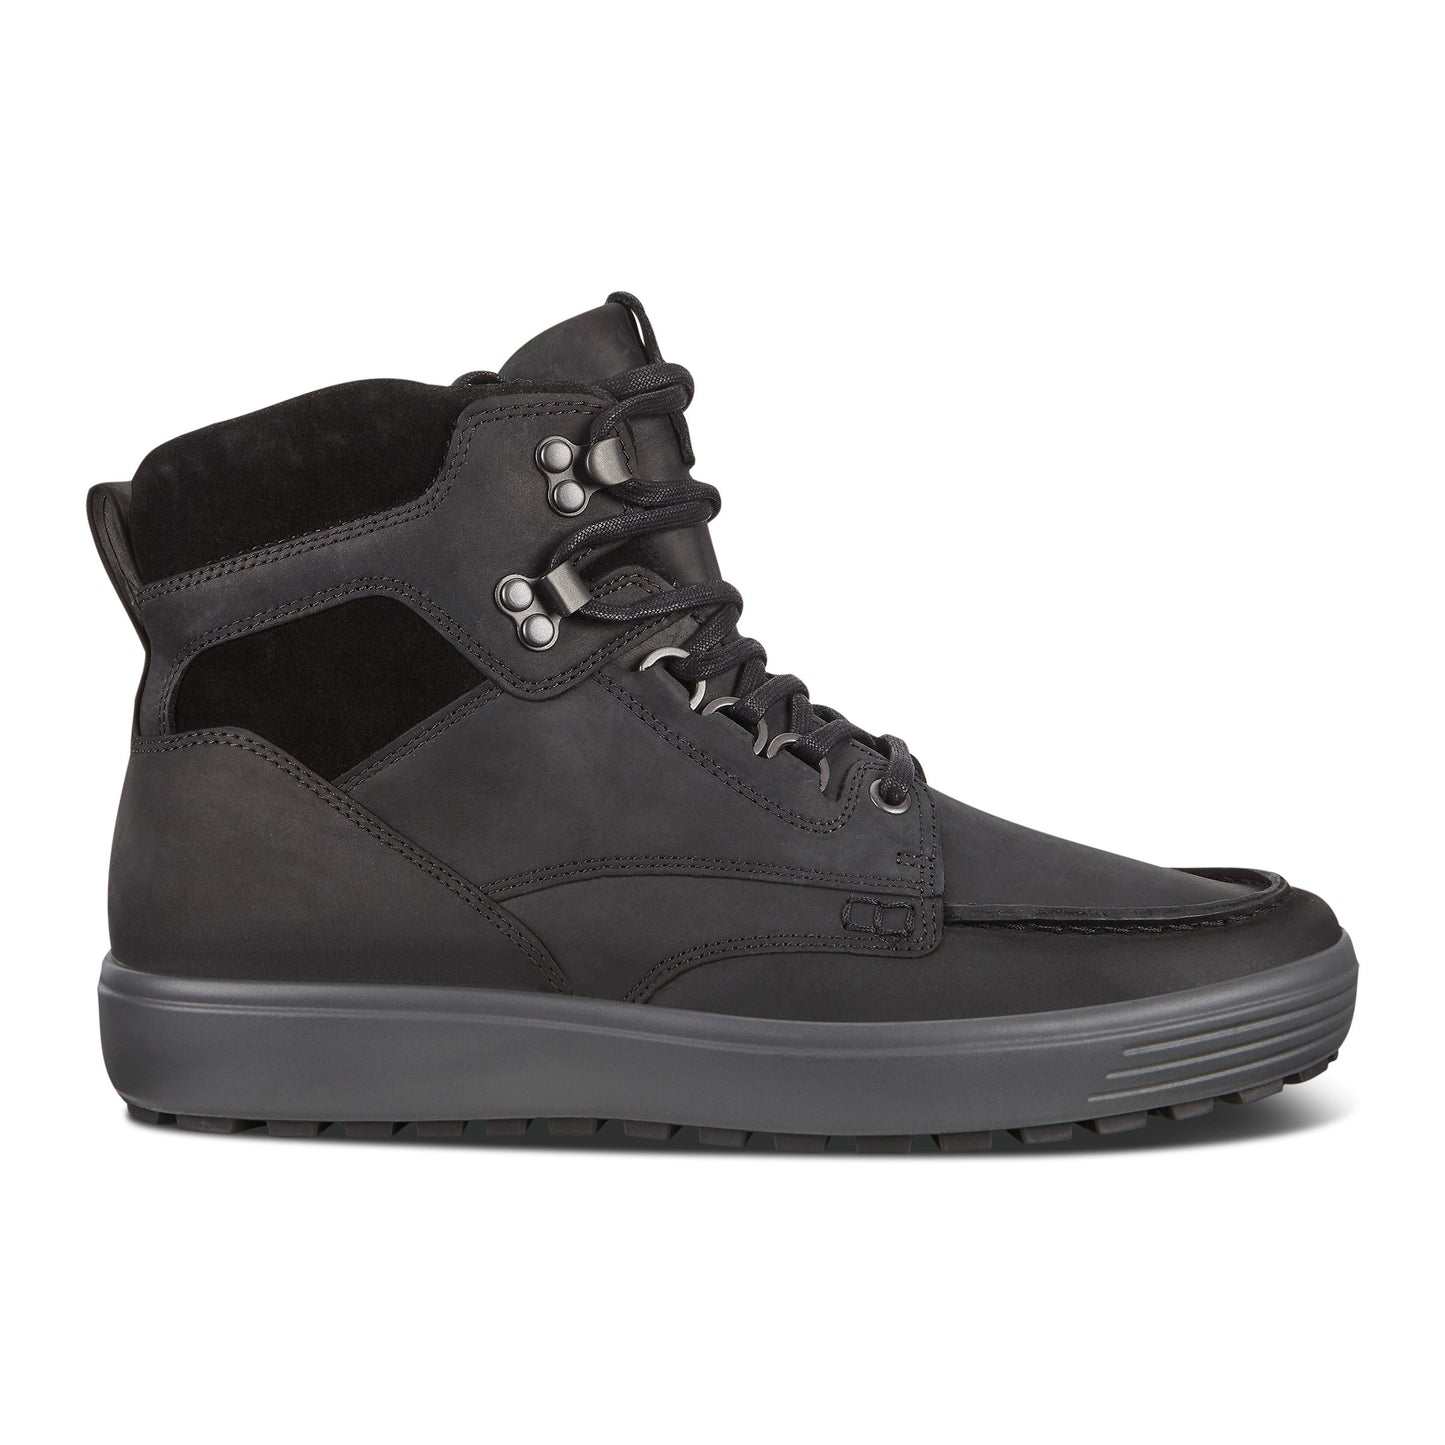 Ecco Men's 7 Tred Waterproof - Black/Black – Shoes